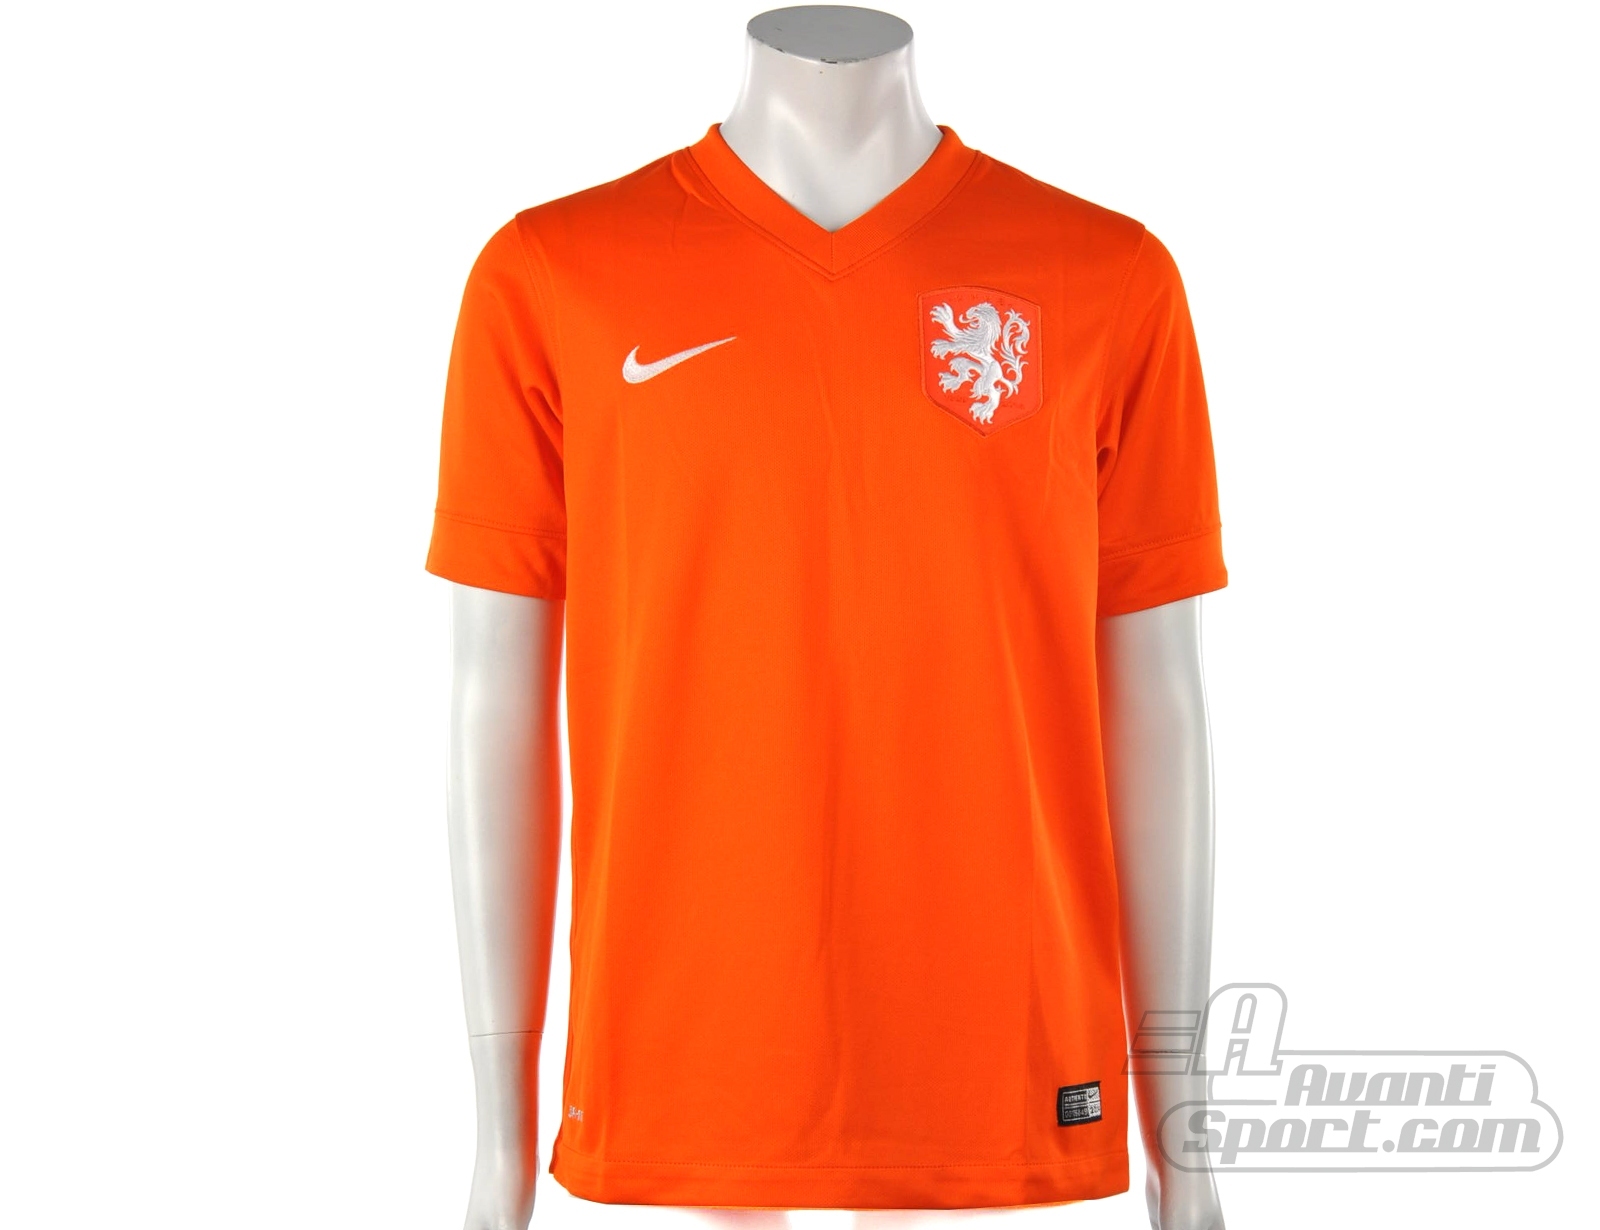 Avantisport - Nike - Dutch Short Sleeve Boys Home Stadium Jersey 2014-2015 - Holland Shirt 2014